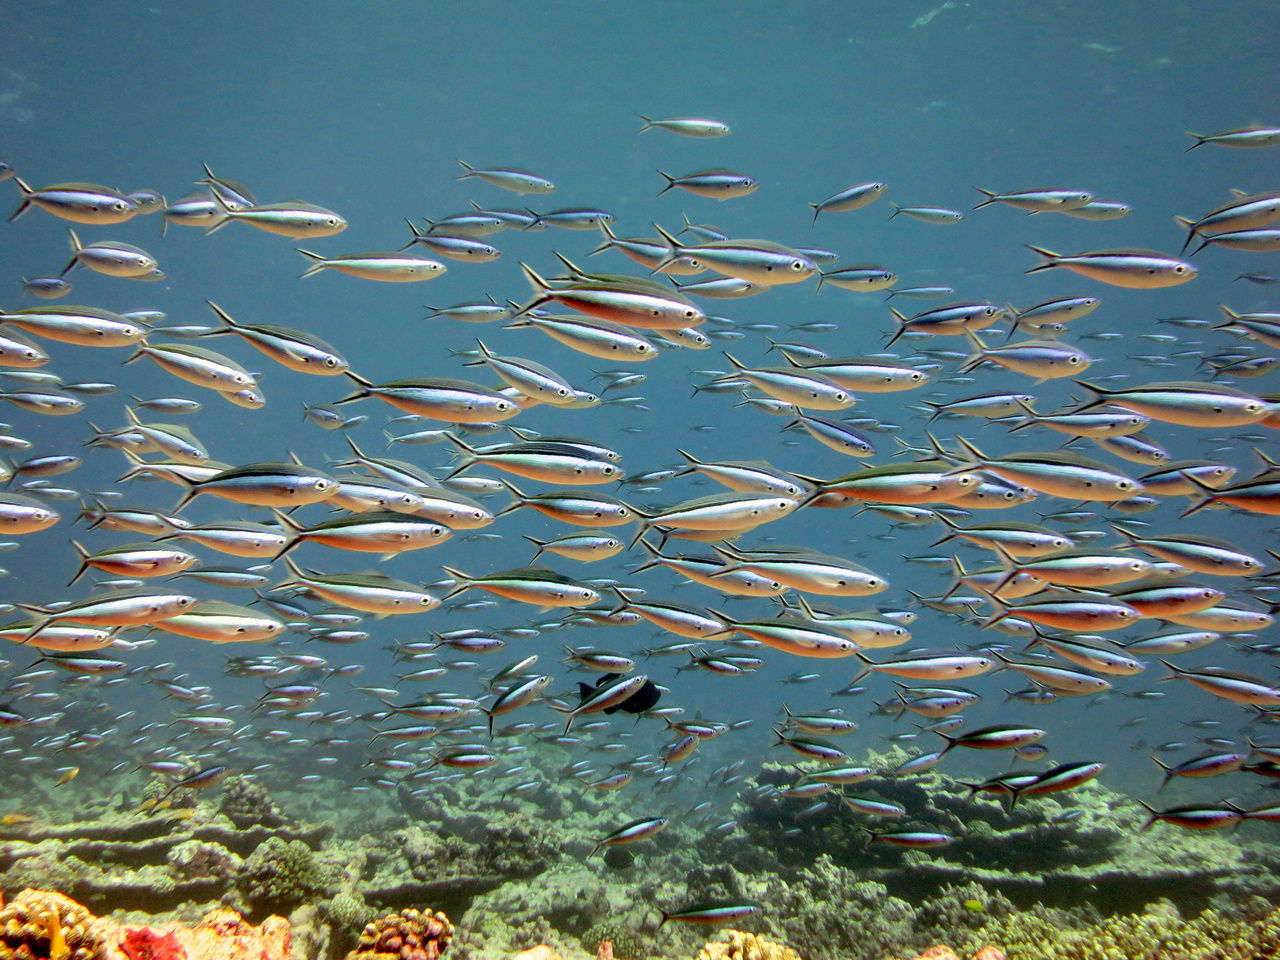 atoll reef fish